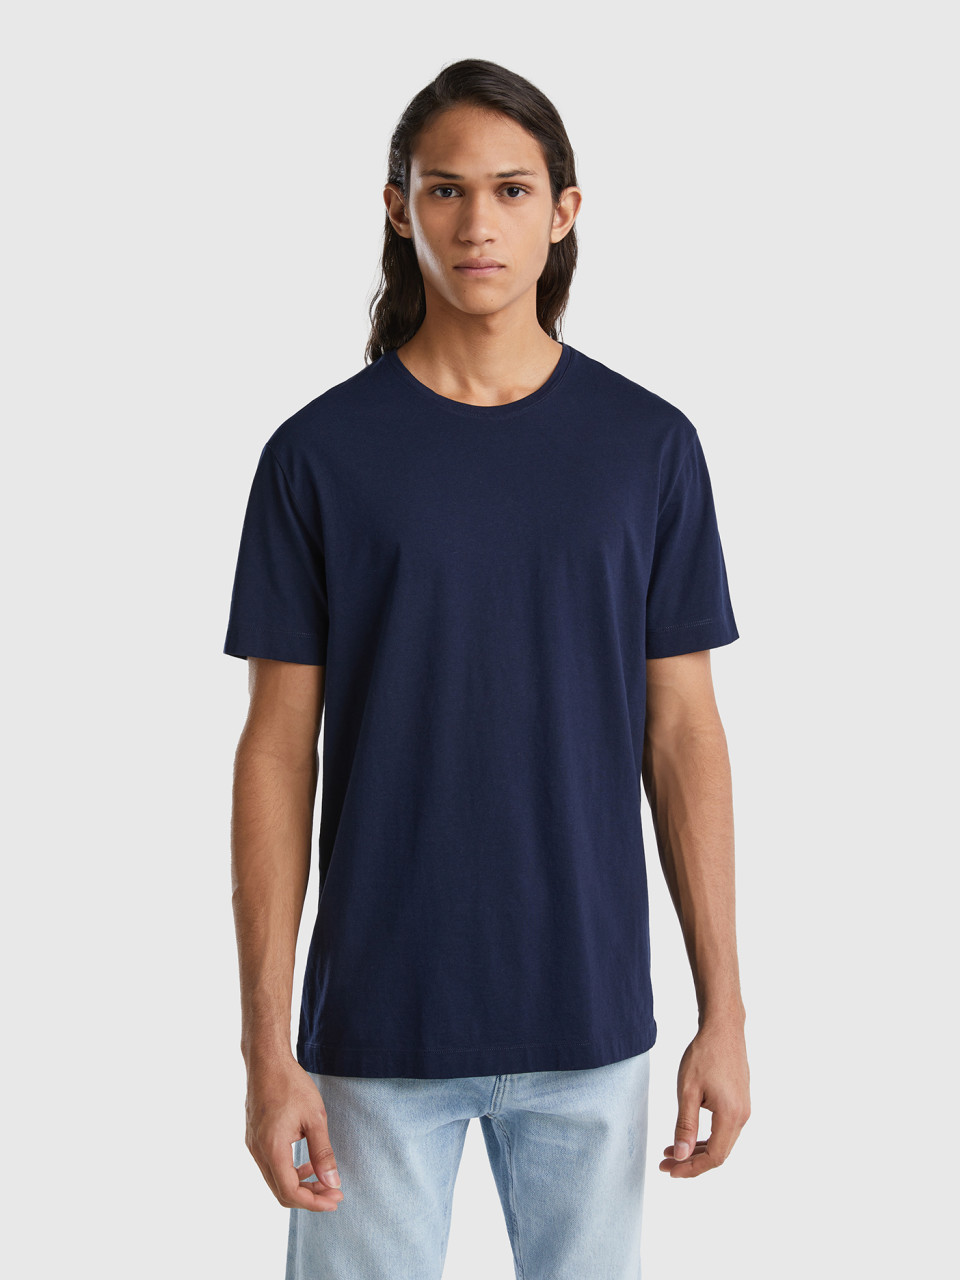 Benetton, T-shirt In Cotton And Cashmere Blend, Dark Blue, Men